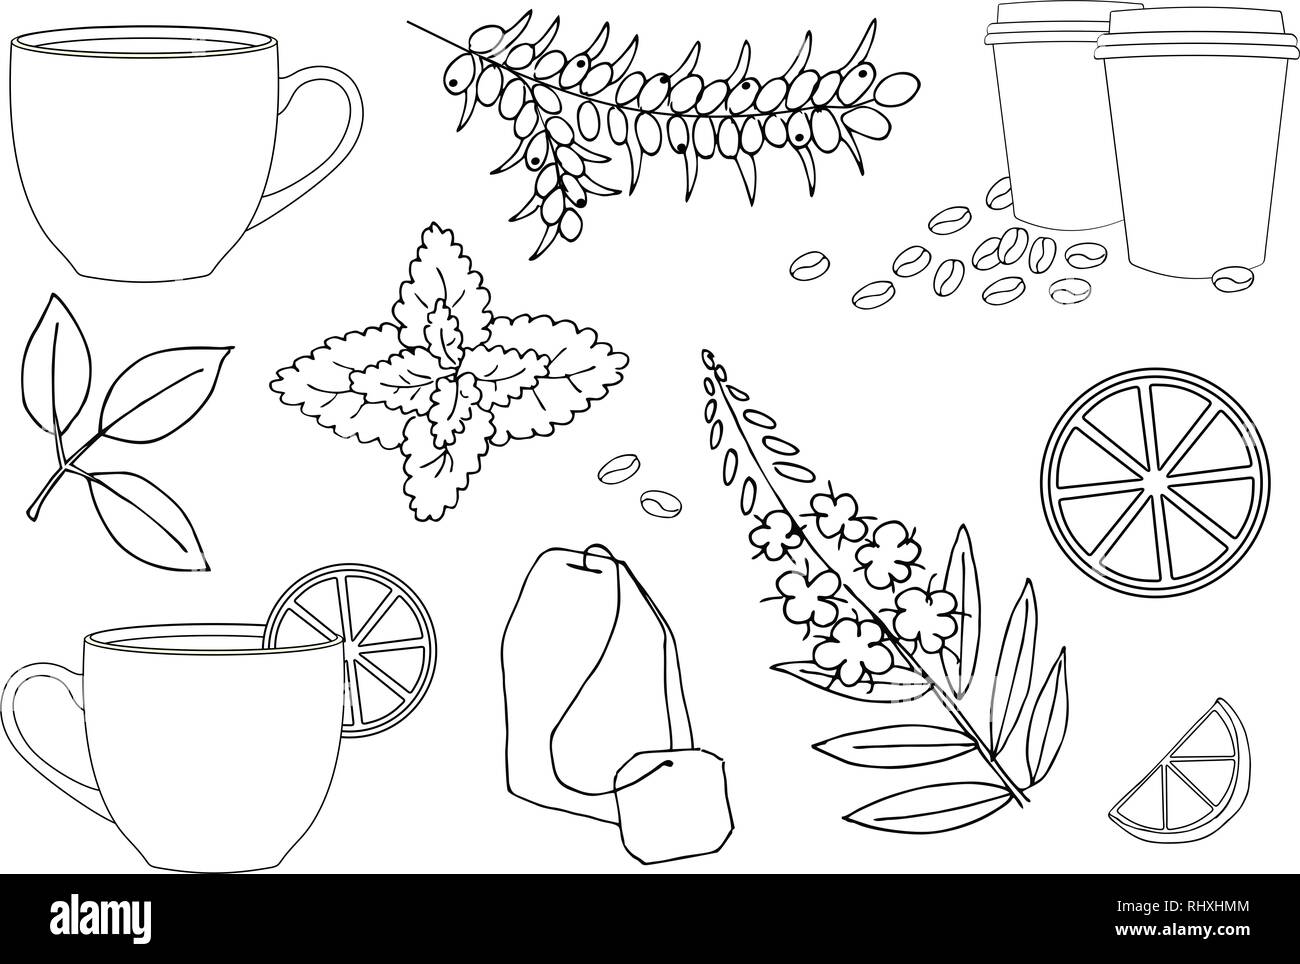 Tazza di tè caldo, una tazza di tè alle erbe. Varie erbe ingredienti tè raccolta su sfondo bianco. Rasterillustration set. Foto Stock